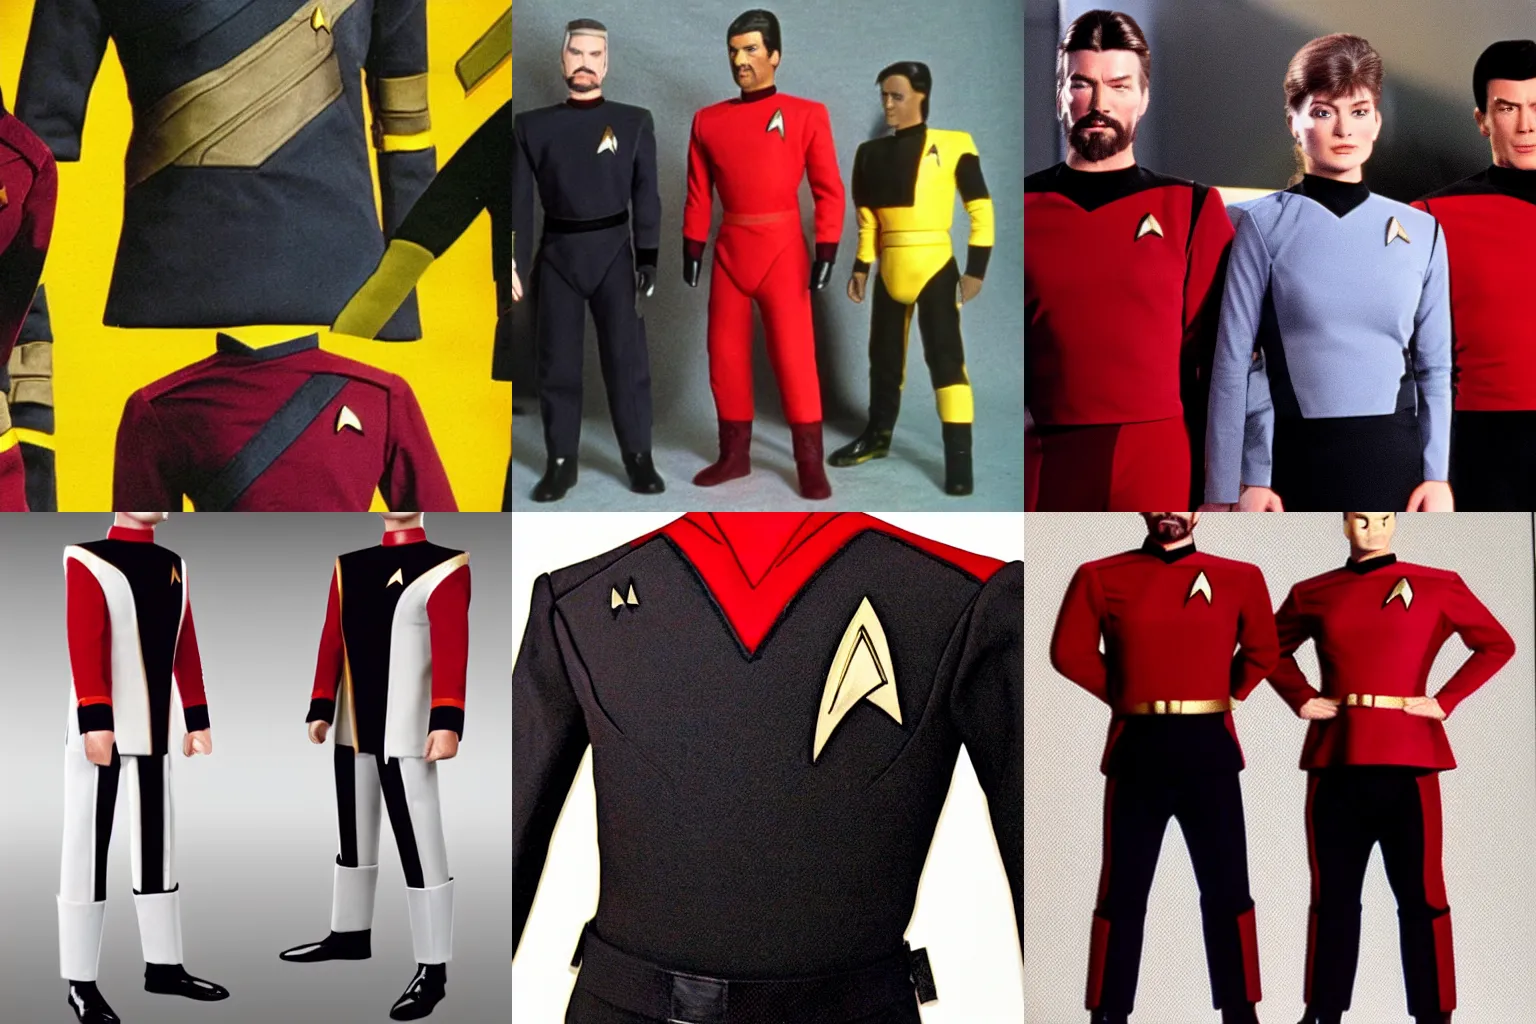 Prompt: sill image star trek tng, commander riker, black and red starfleet uniform